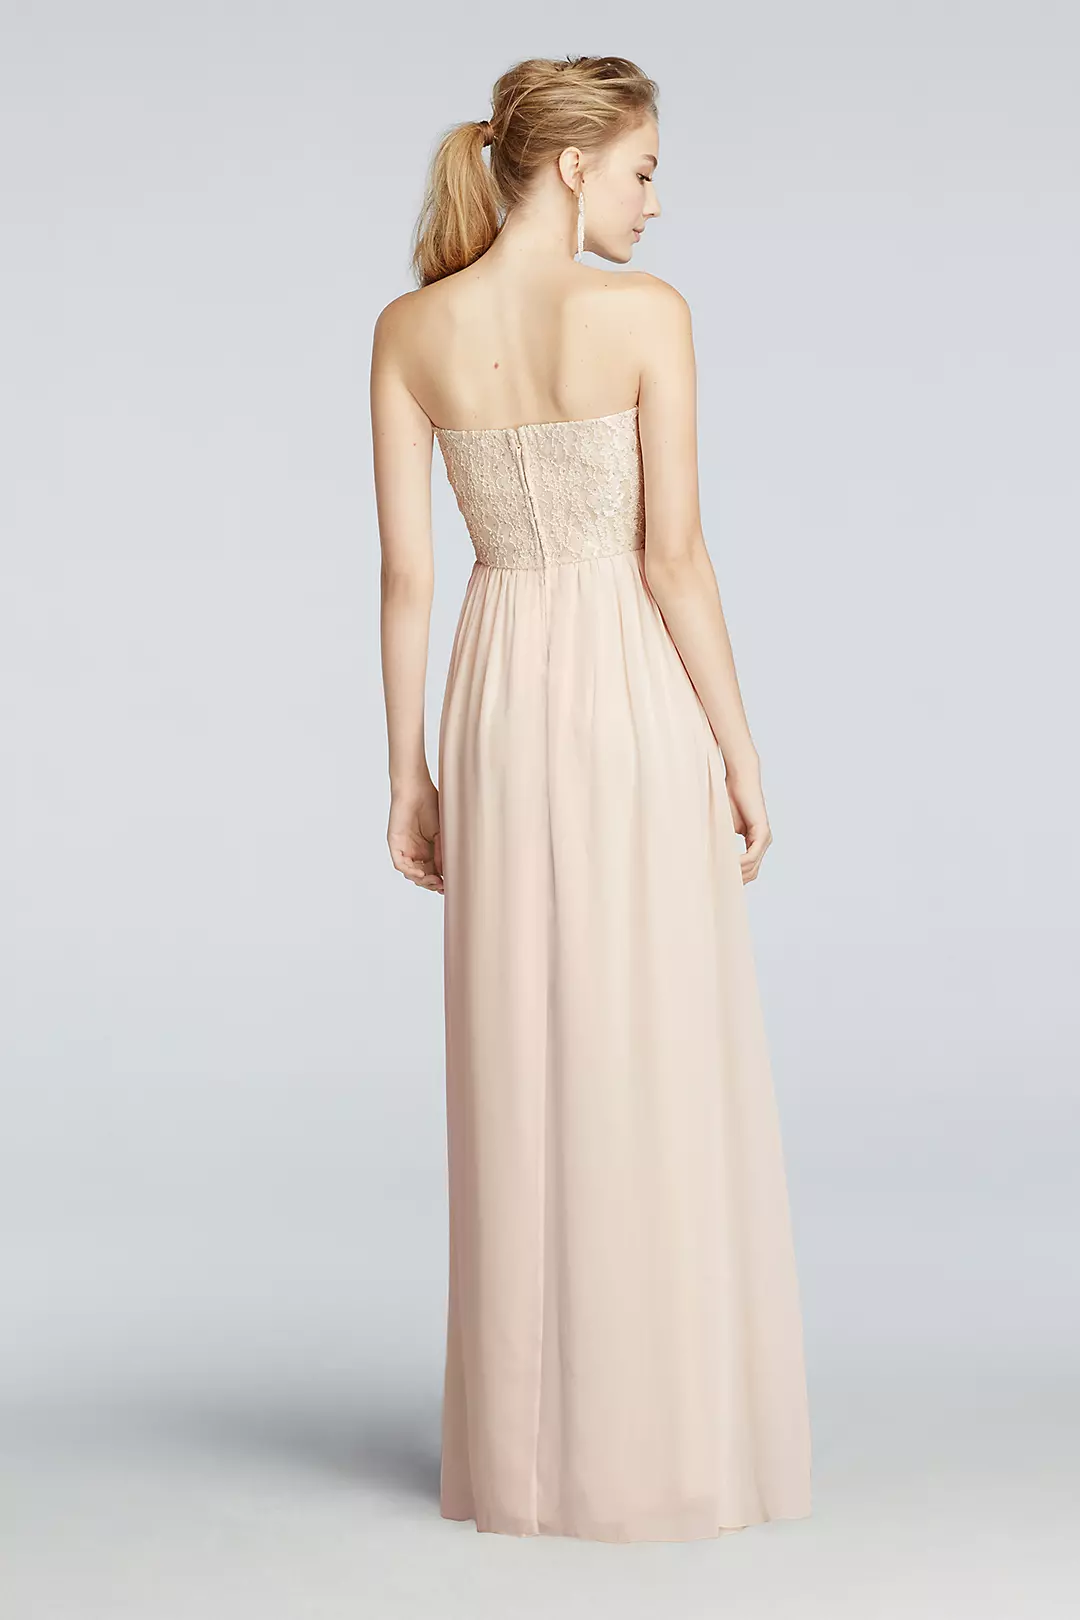 Strapless Chiffon Pastel Prom Dress | David's Bridal